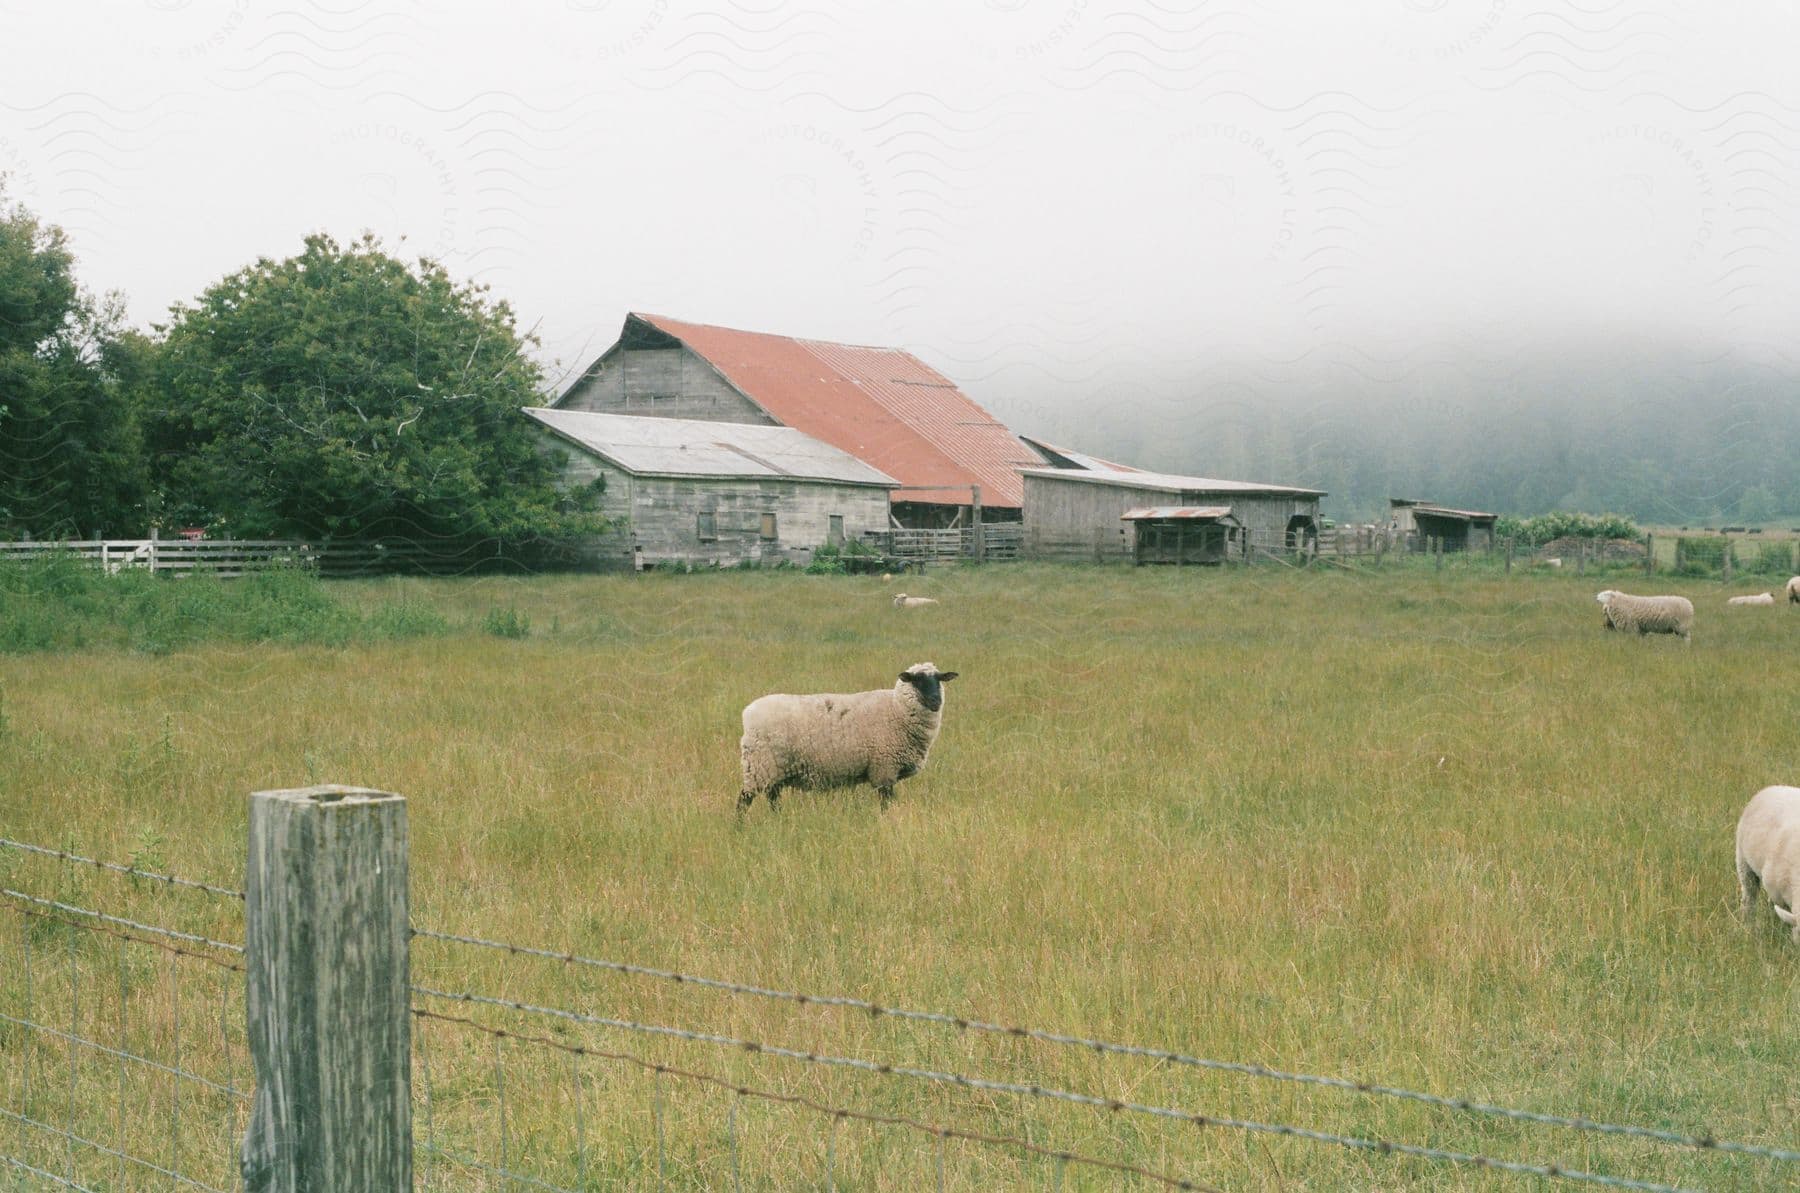 Sheep stand in a grassy pasture near a farm